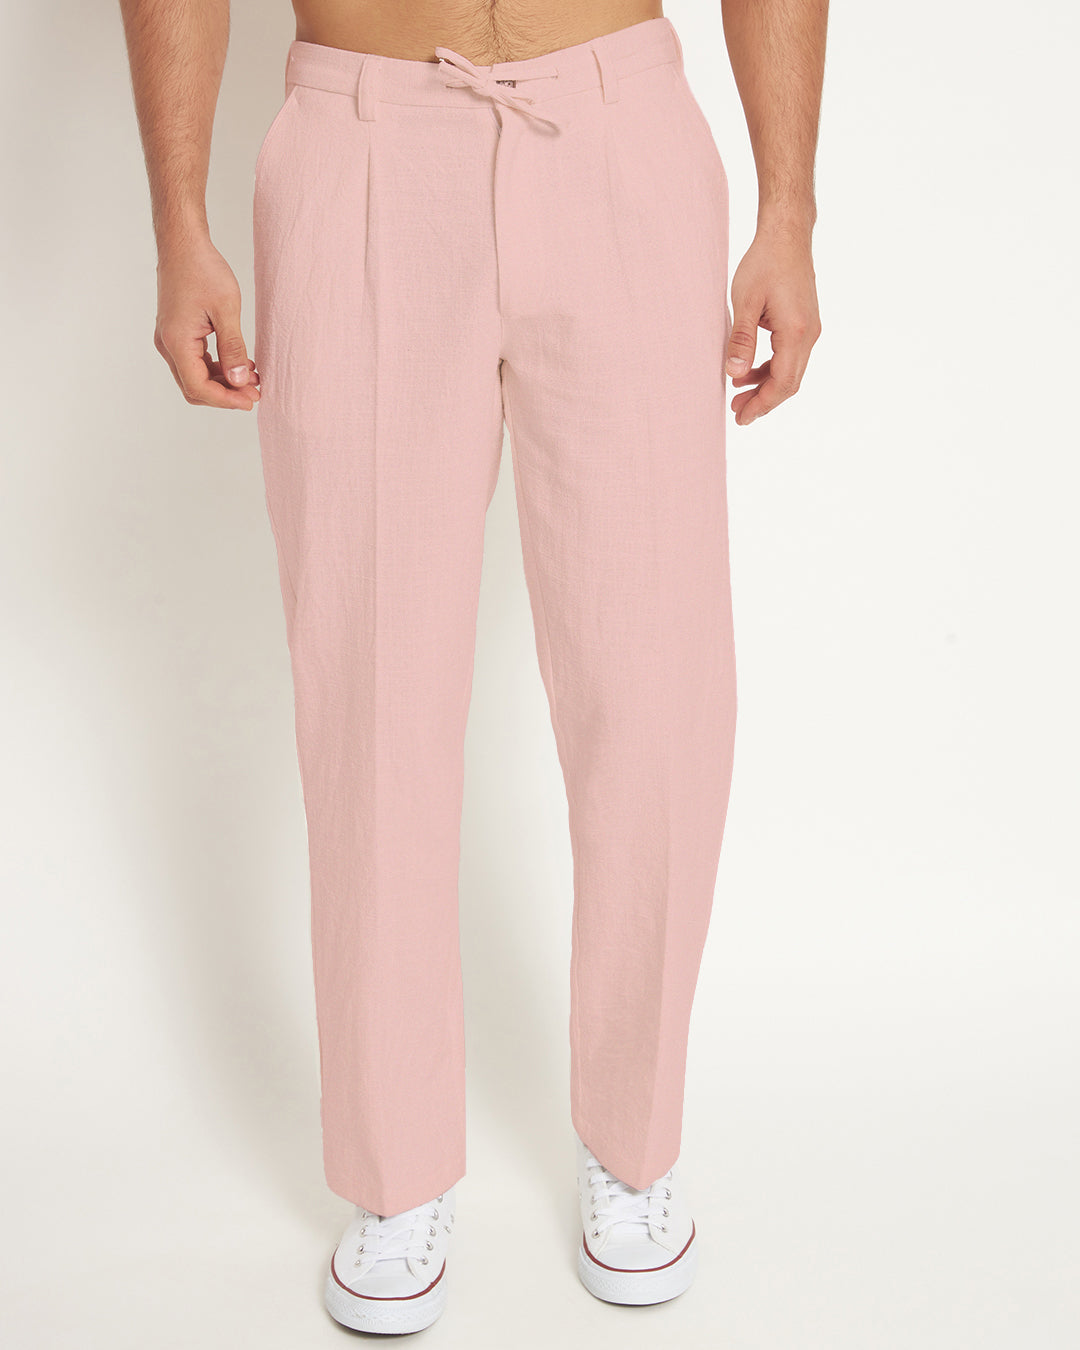 Combo: Casual Ease Fondant Pink & White Men's Pants - Set of 2